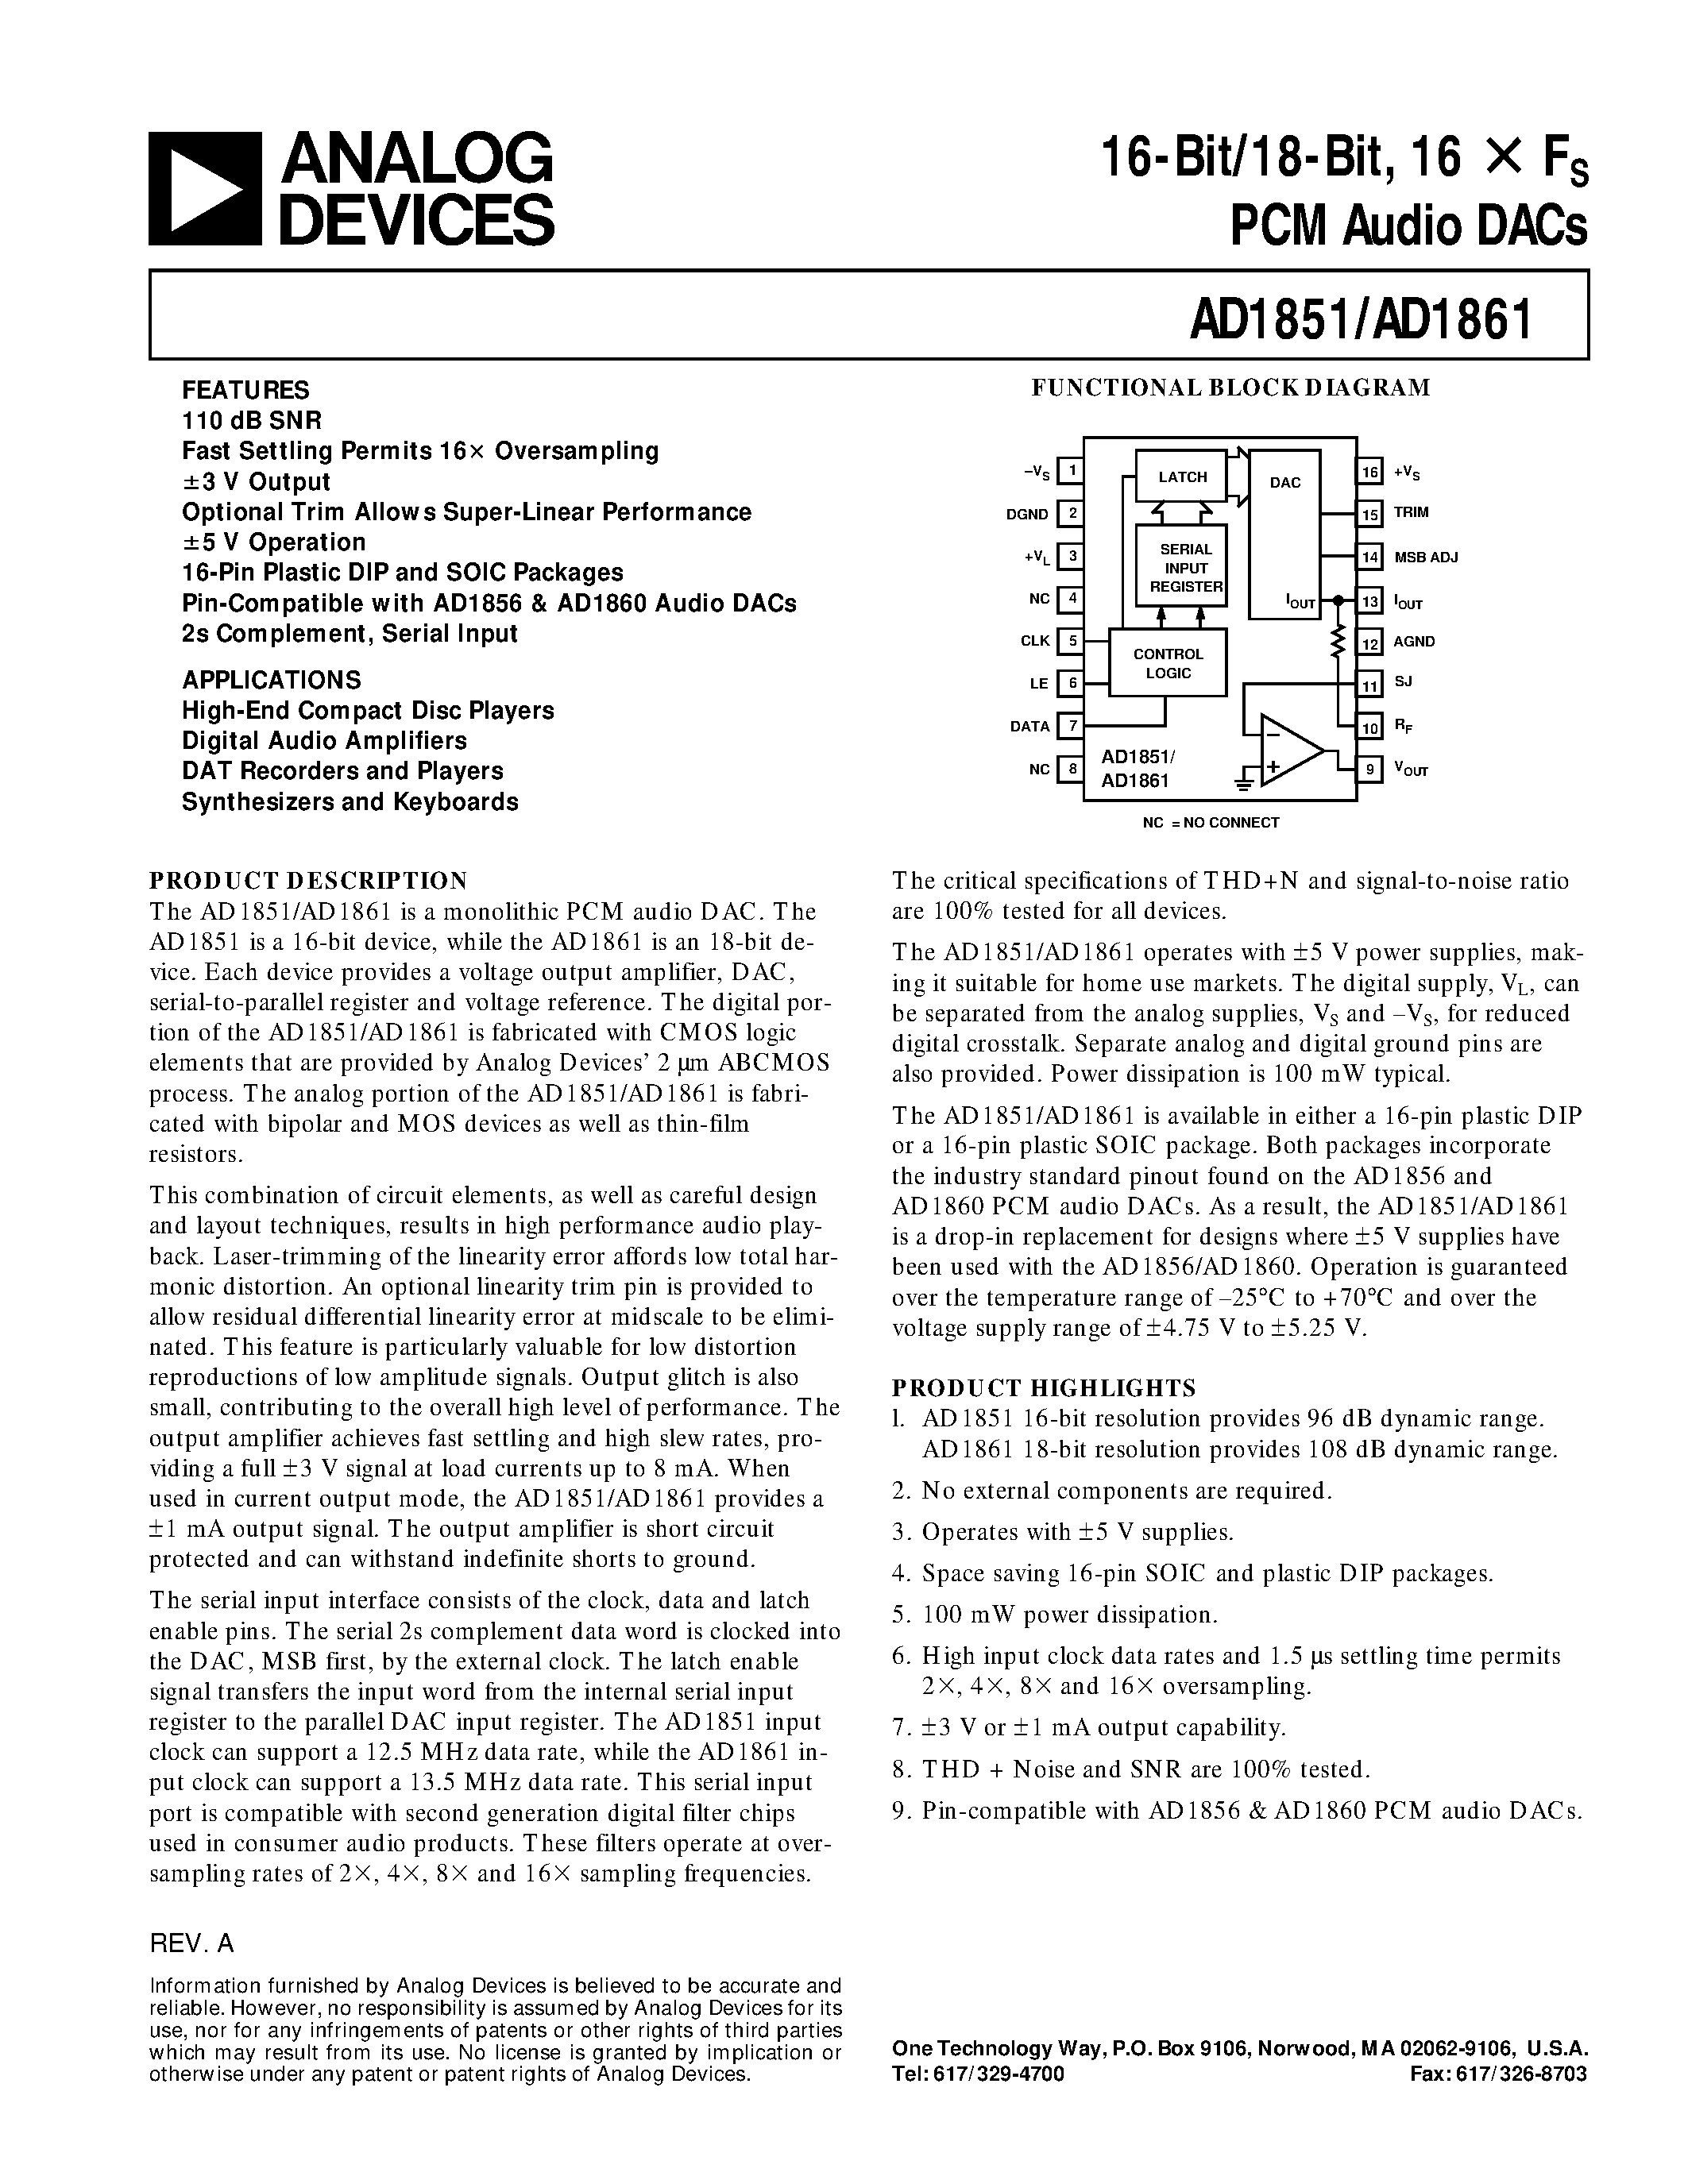 Datasheet AD1851R-J - 16-Bit/18-Bit/ 16 X Fs PCM Audio DACs page 1